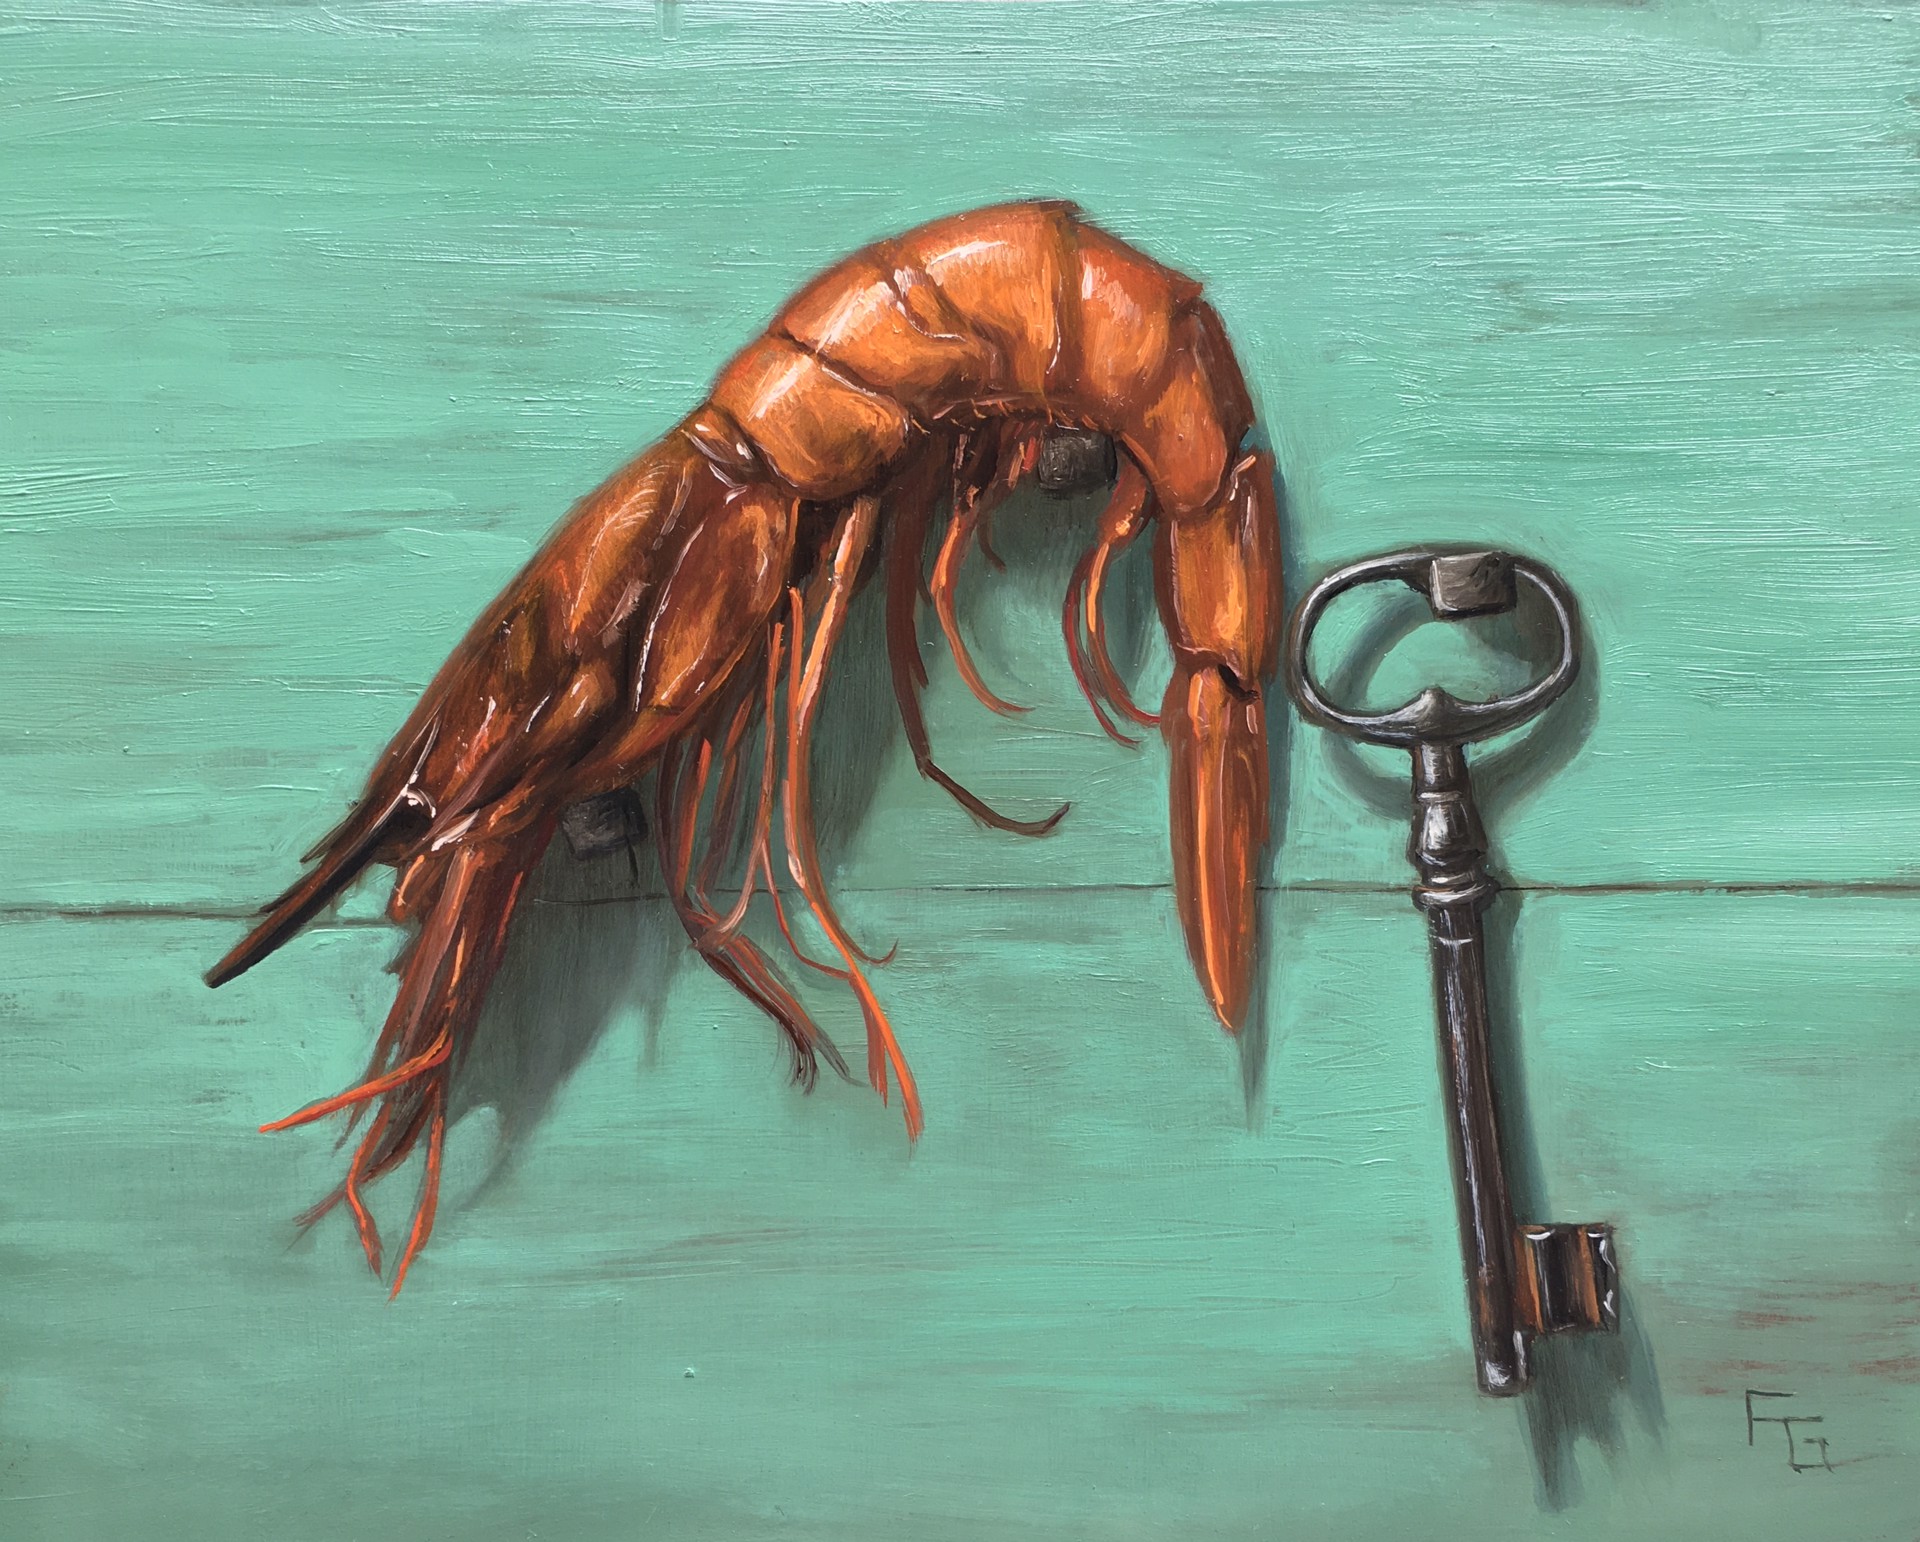 Cardinal Shrimp and Key by Frankie Gollub